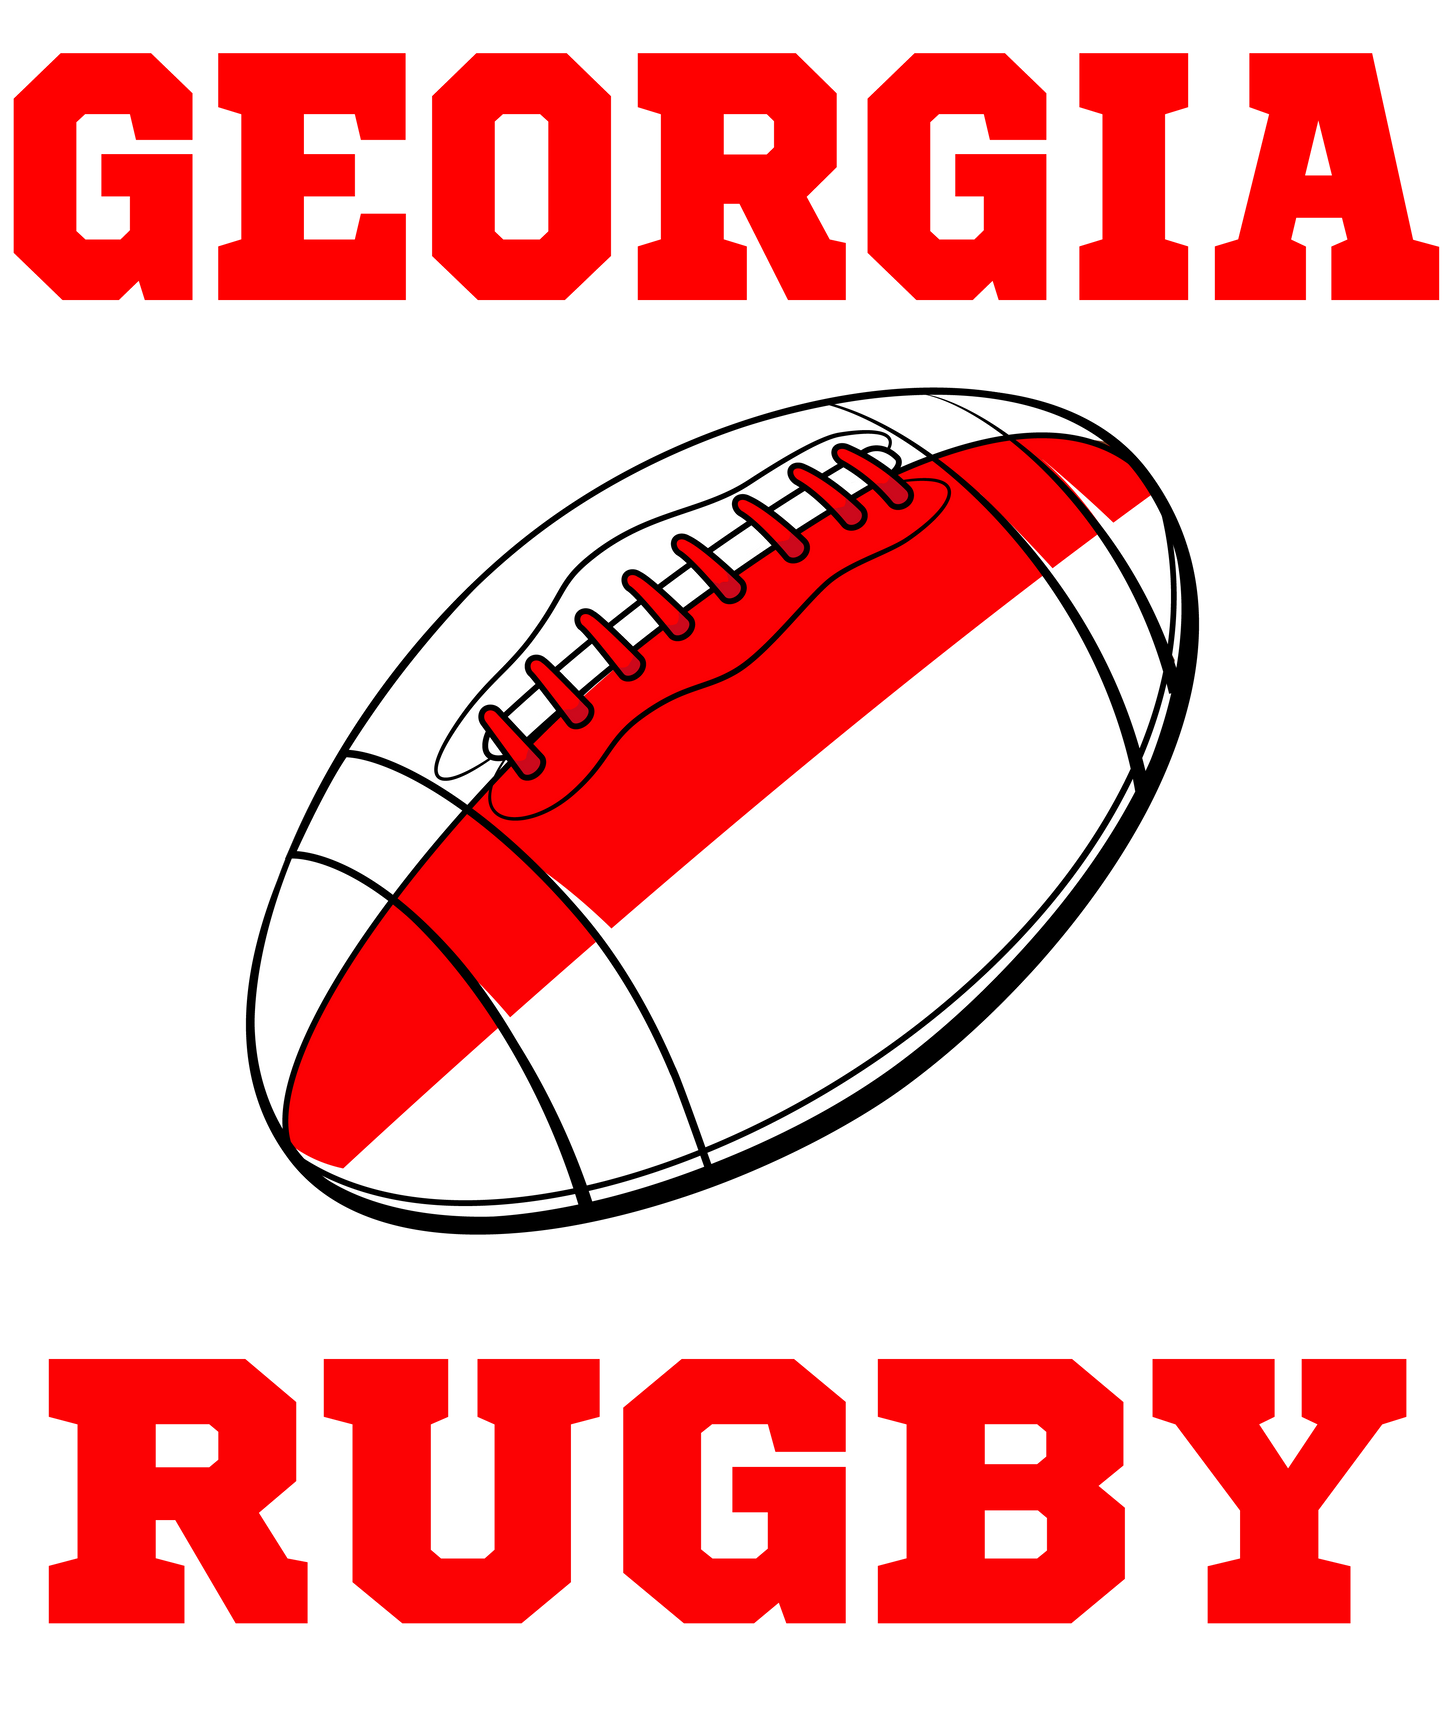 Georgia Rugby Ball Sweatshirt (White)